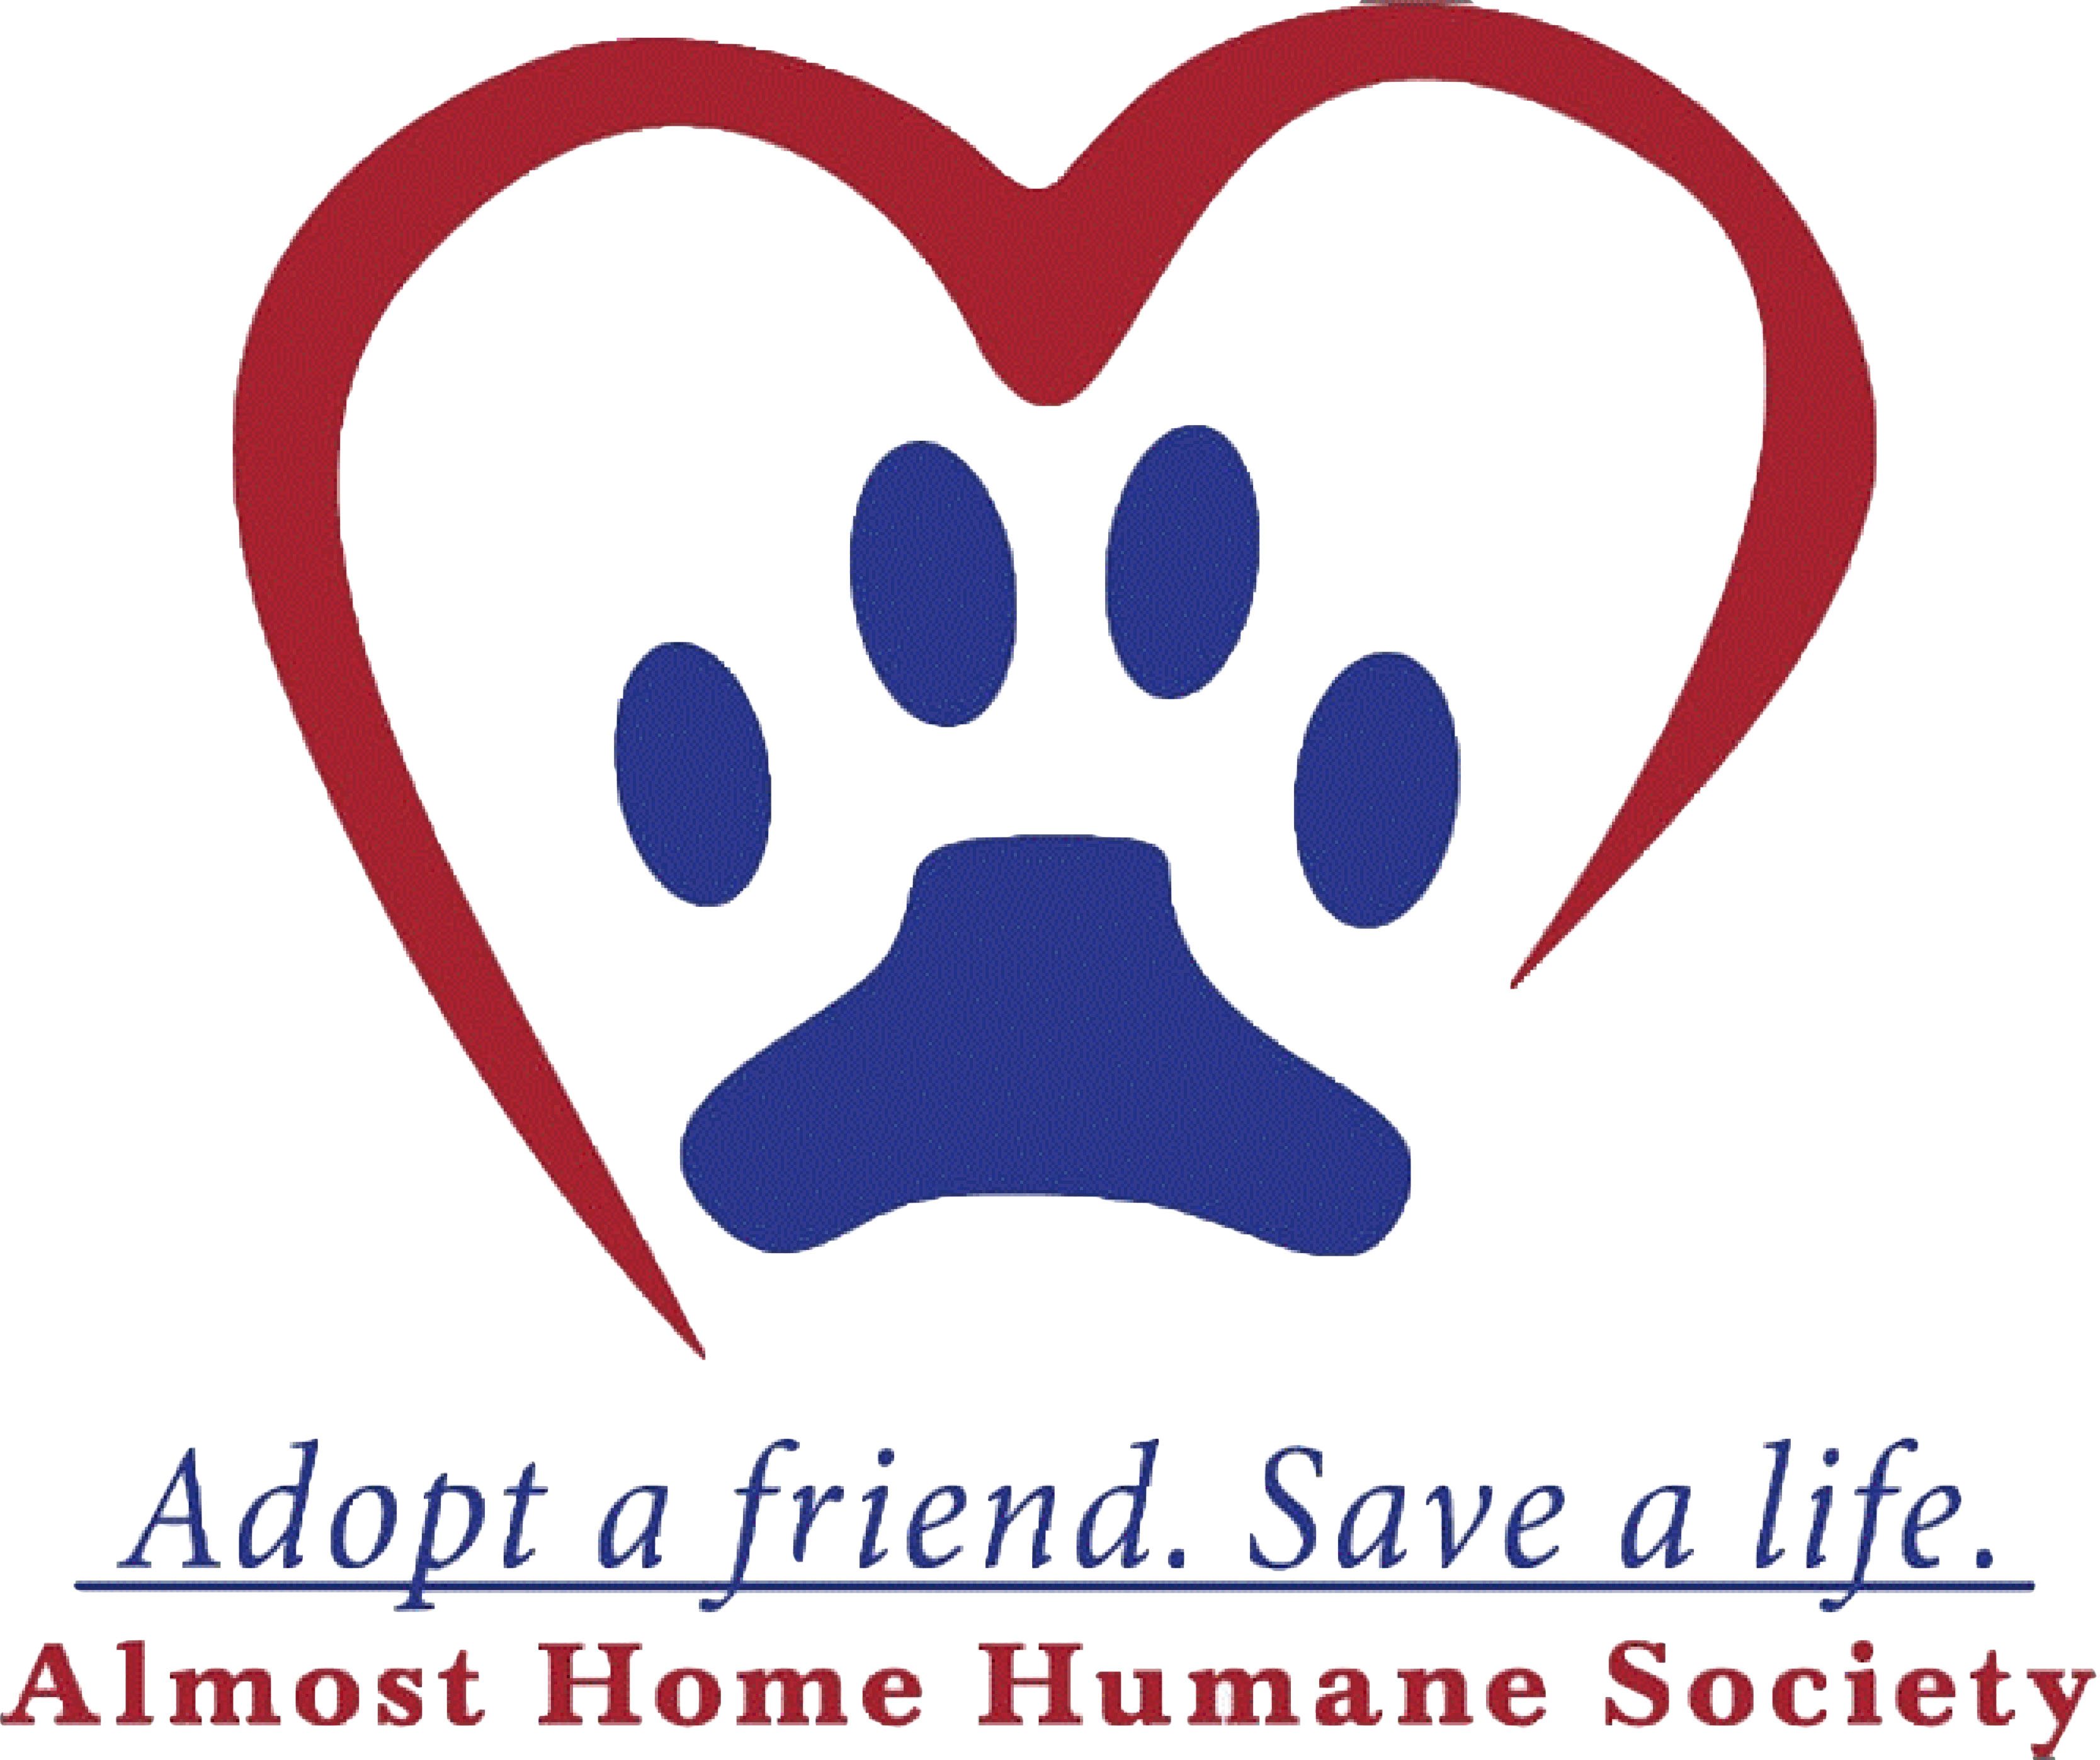 Almost Home Humane Society logo